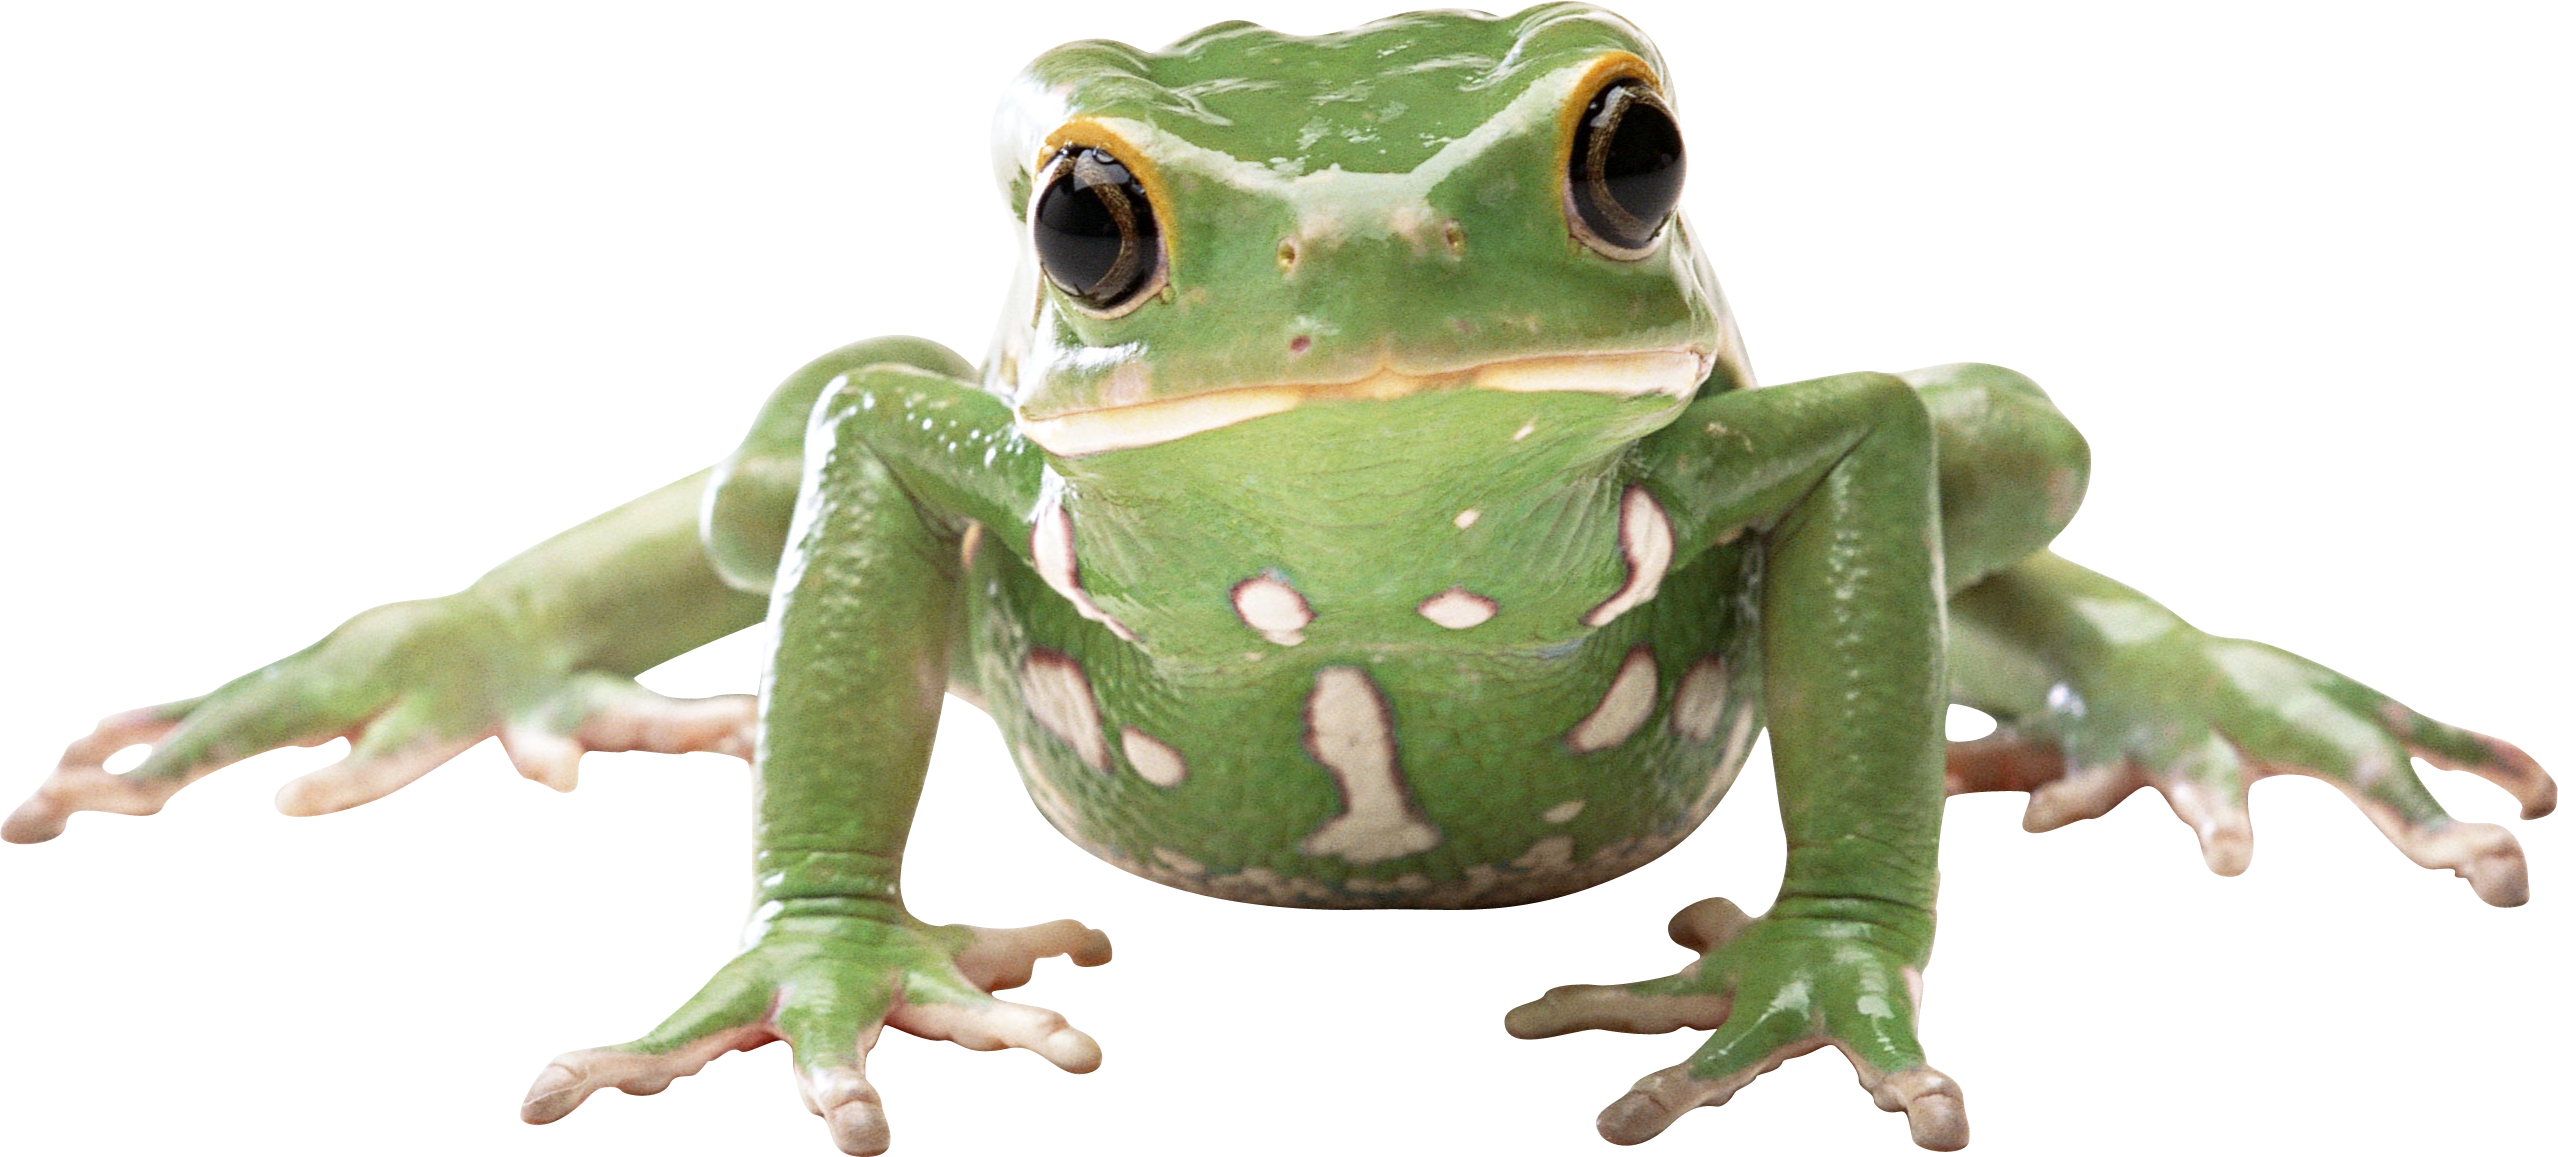 rainforest clipart poison frog